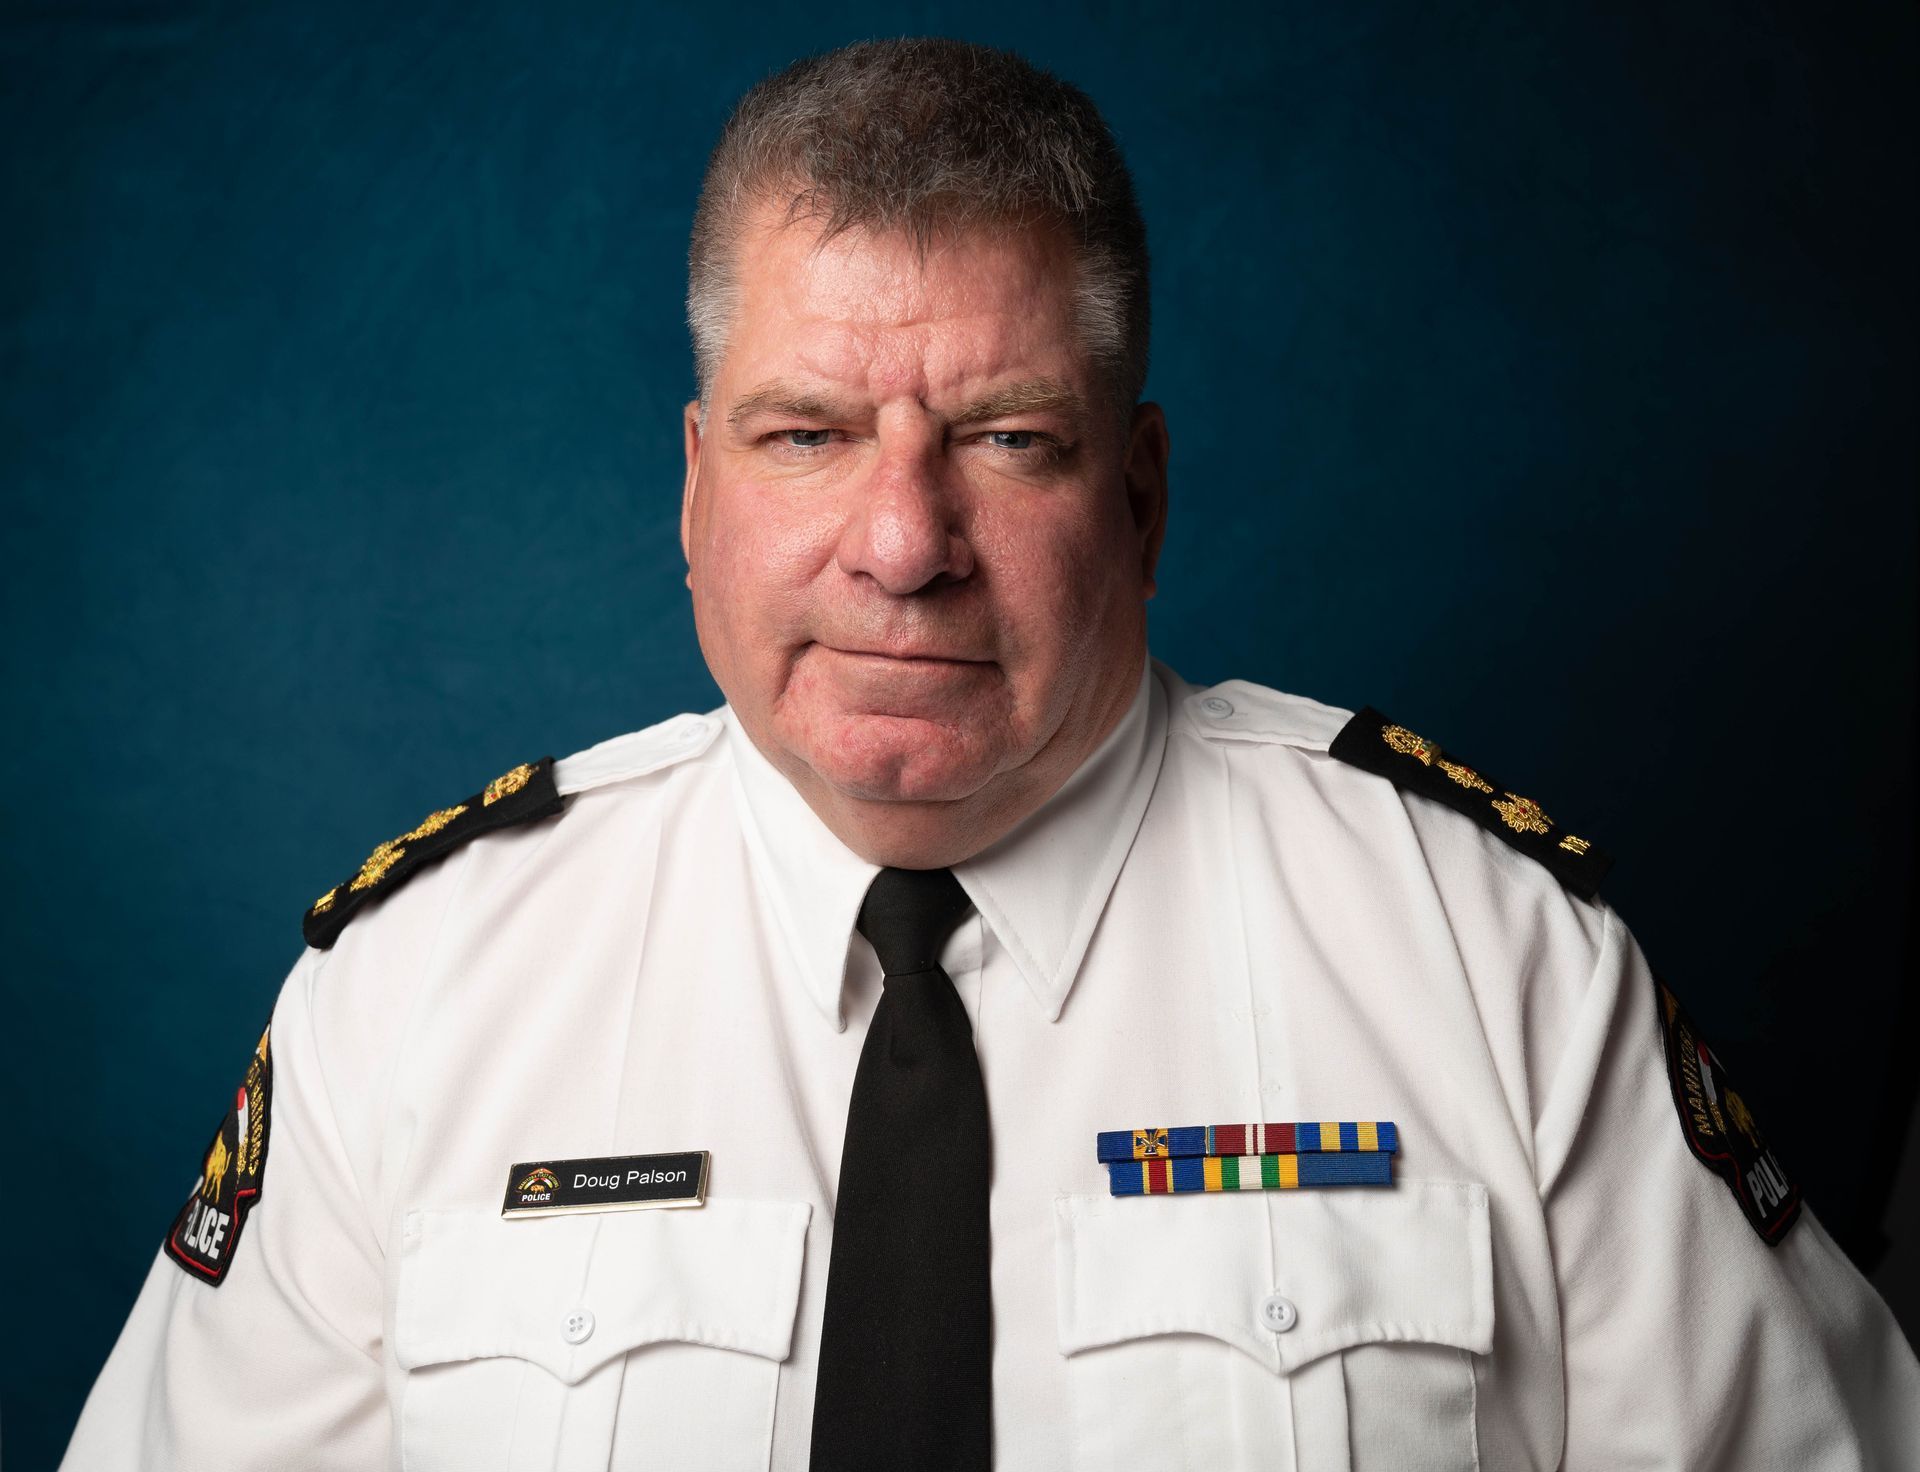 Chief Doug Palson Image